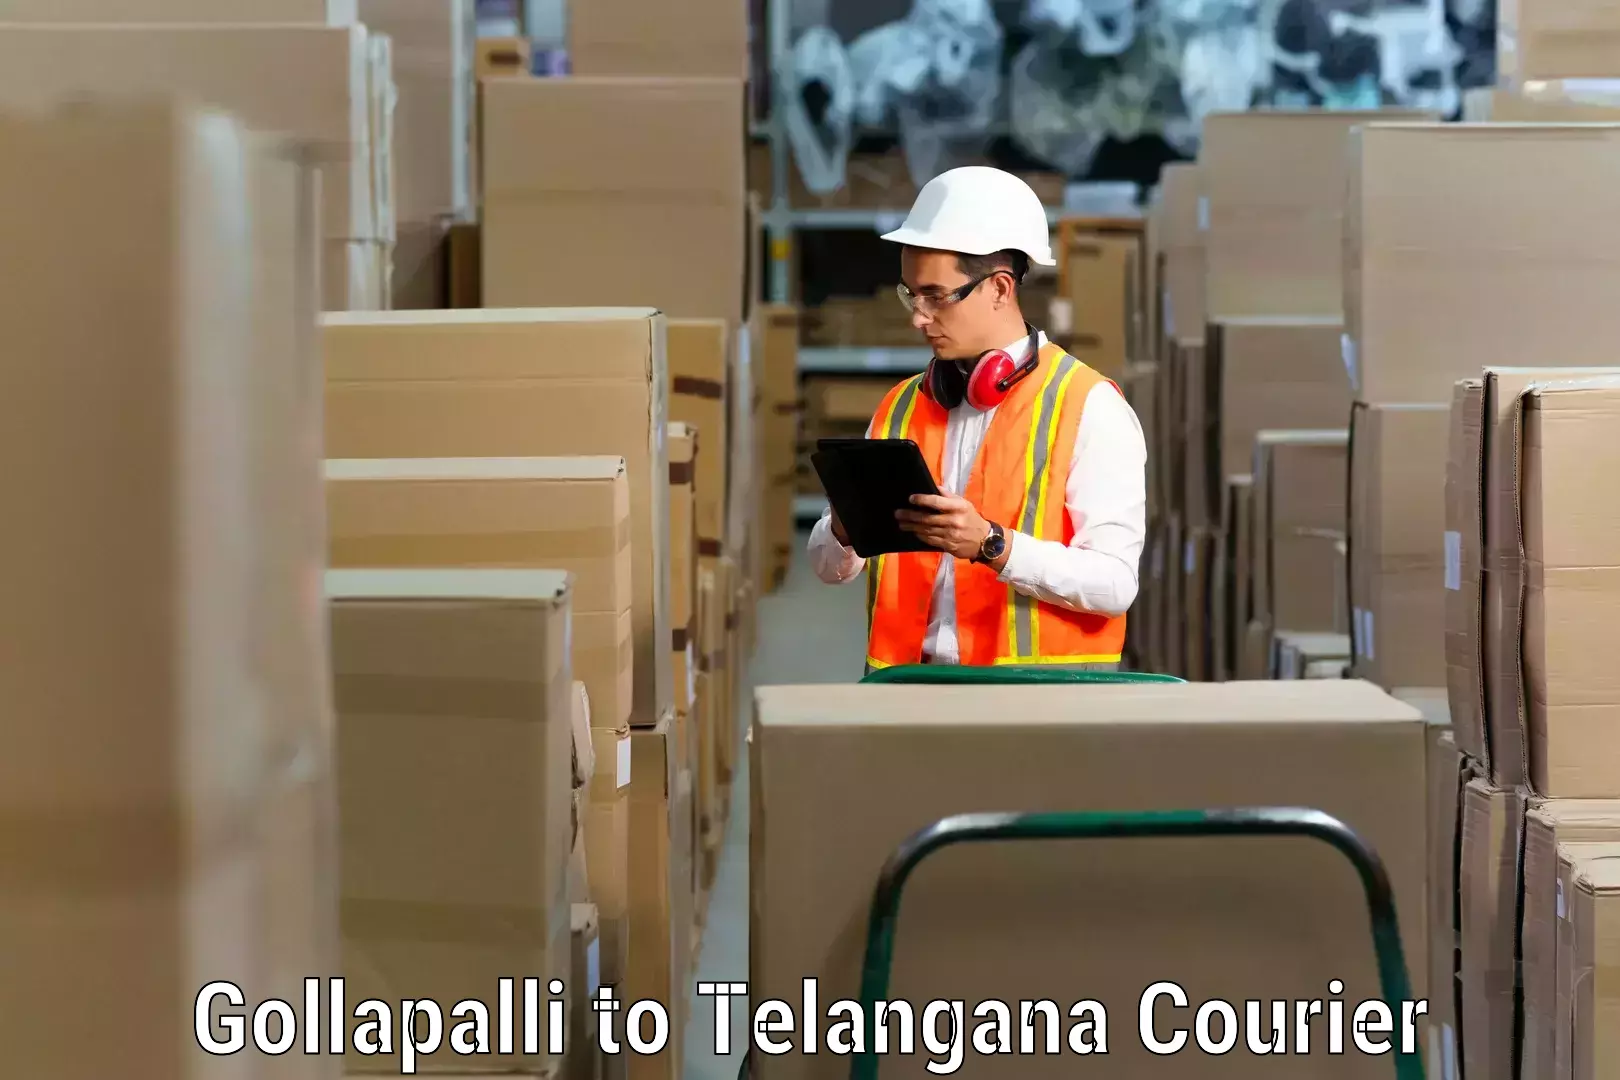 Furniture transport specialists Gollapalli to Gangadhara